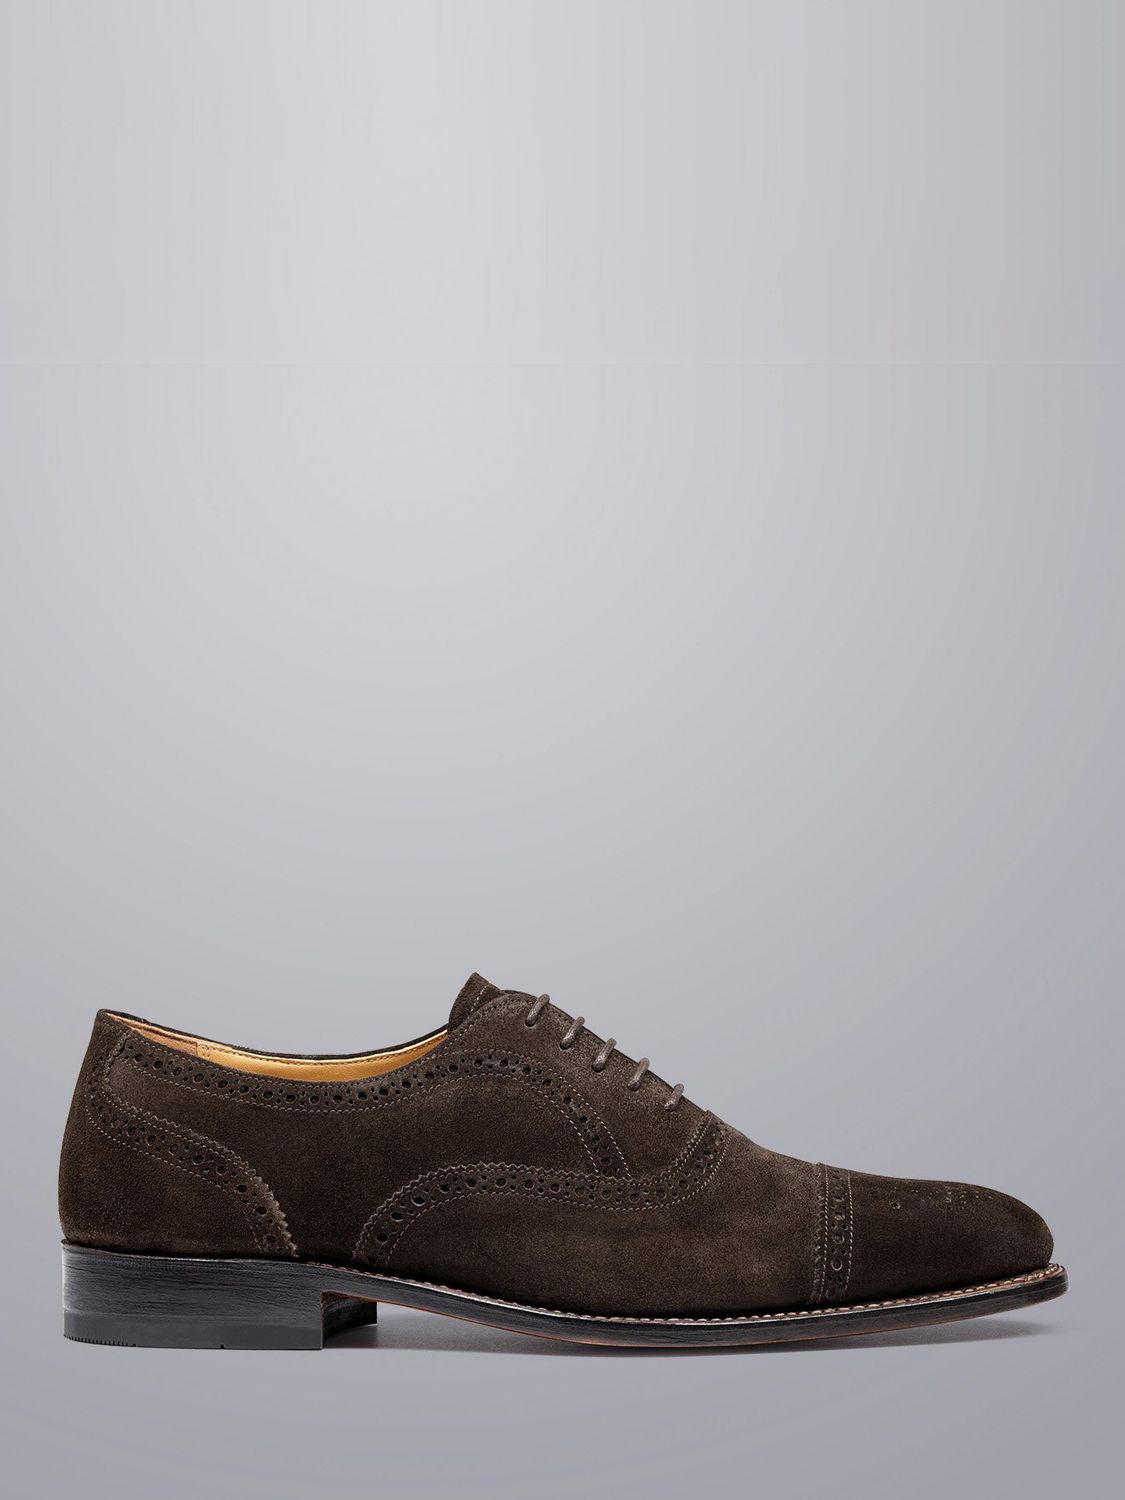 Charles Tyrwhitt Suede Oxford Brogue Shoes, Dark Chocolate, 12